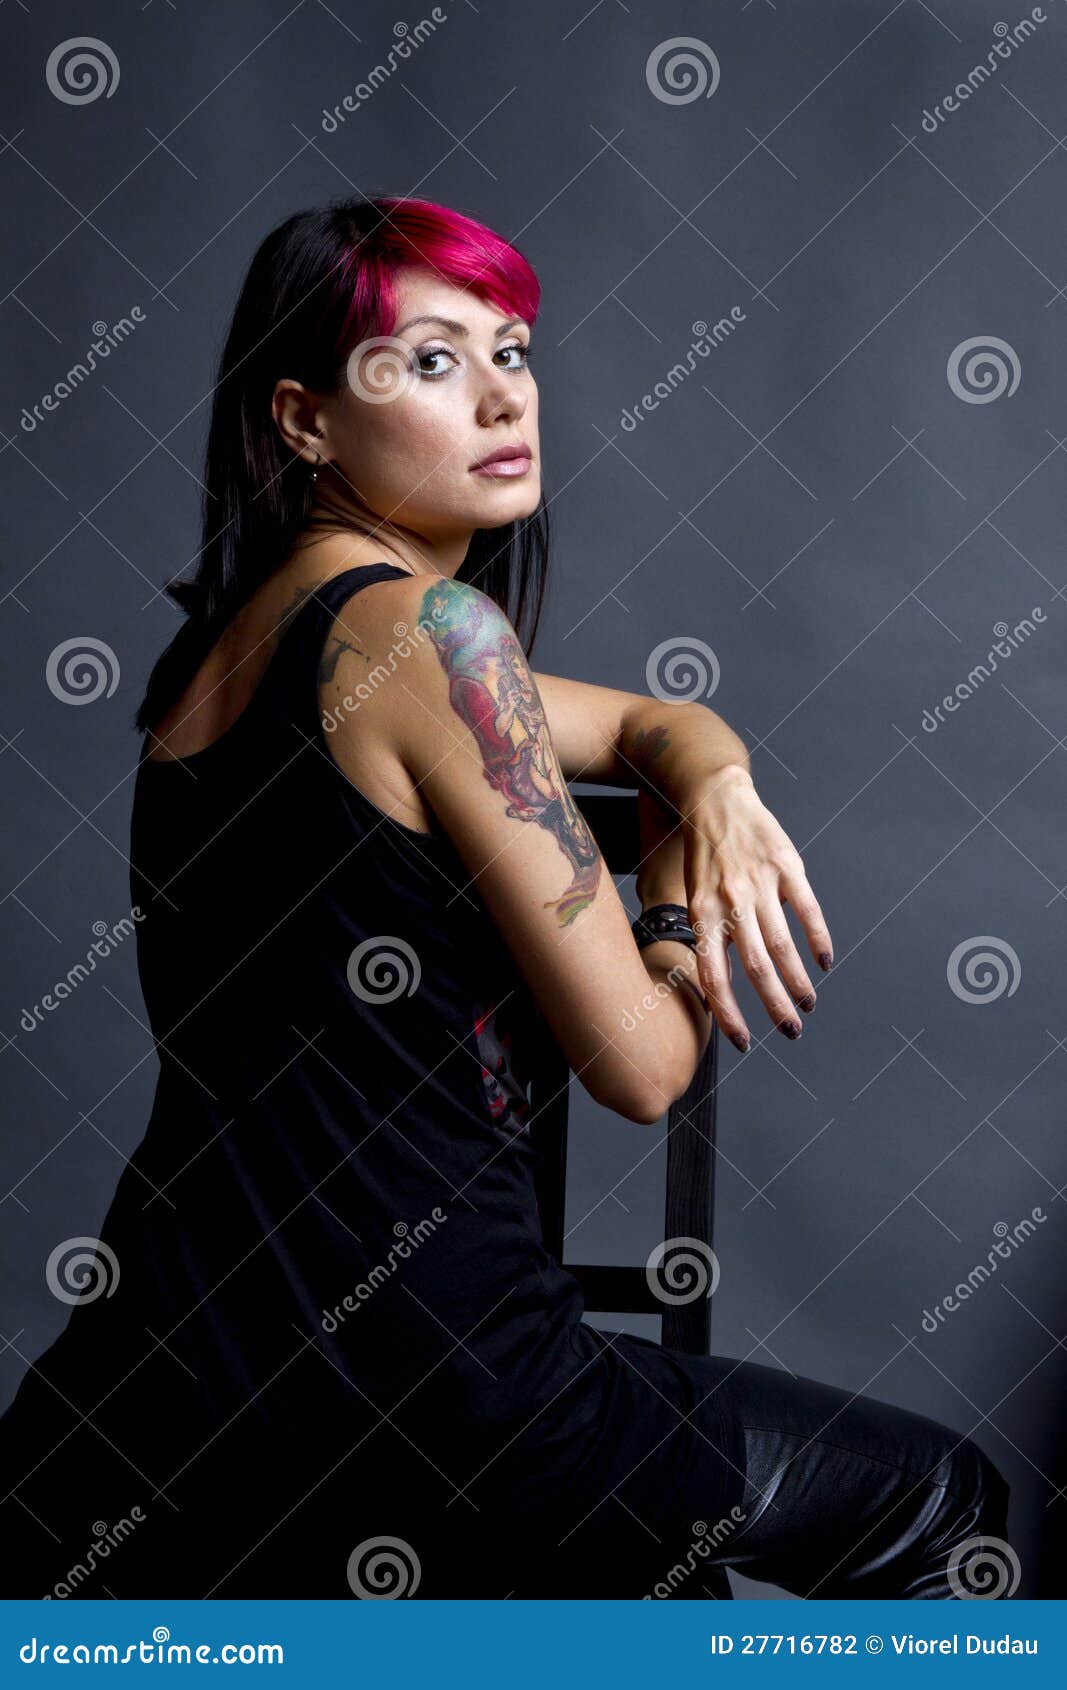 Rebel Woman Stock Photography - Image: 27716782